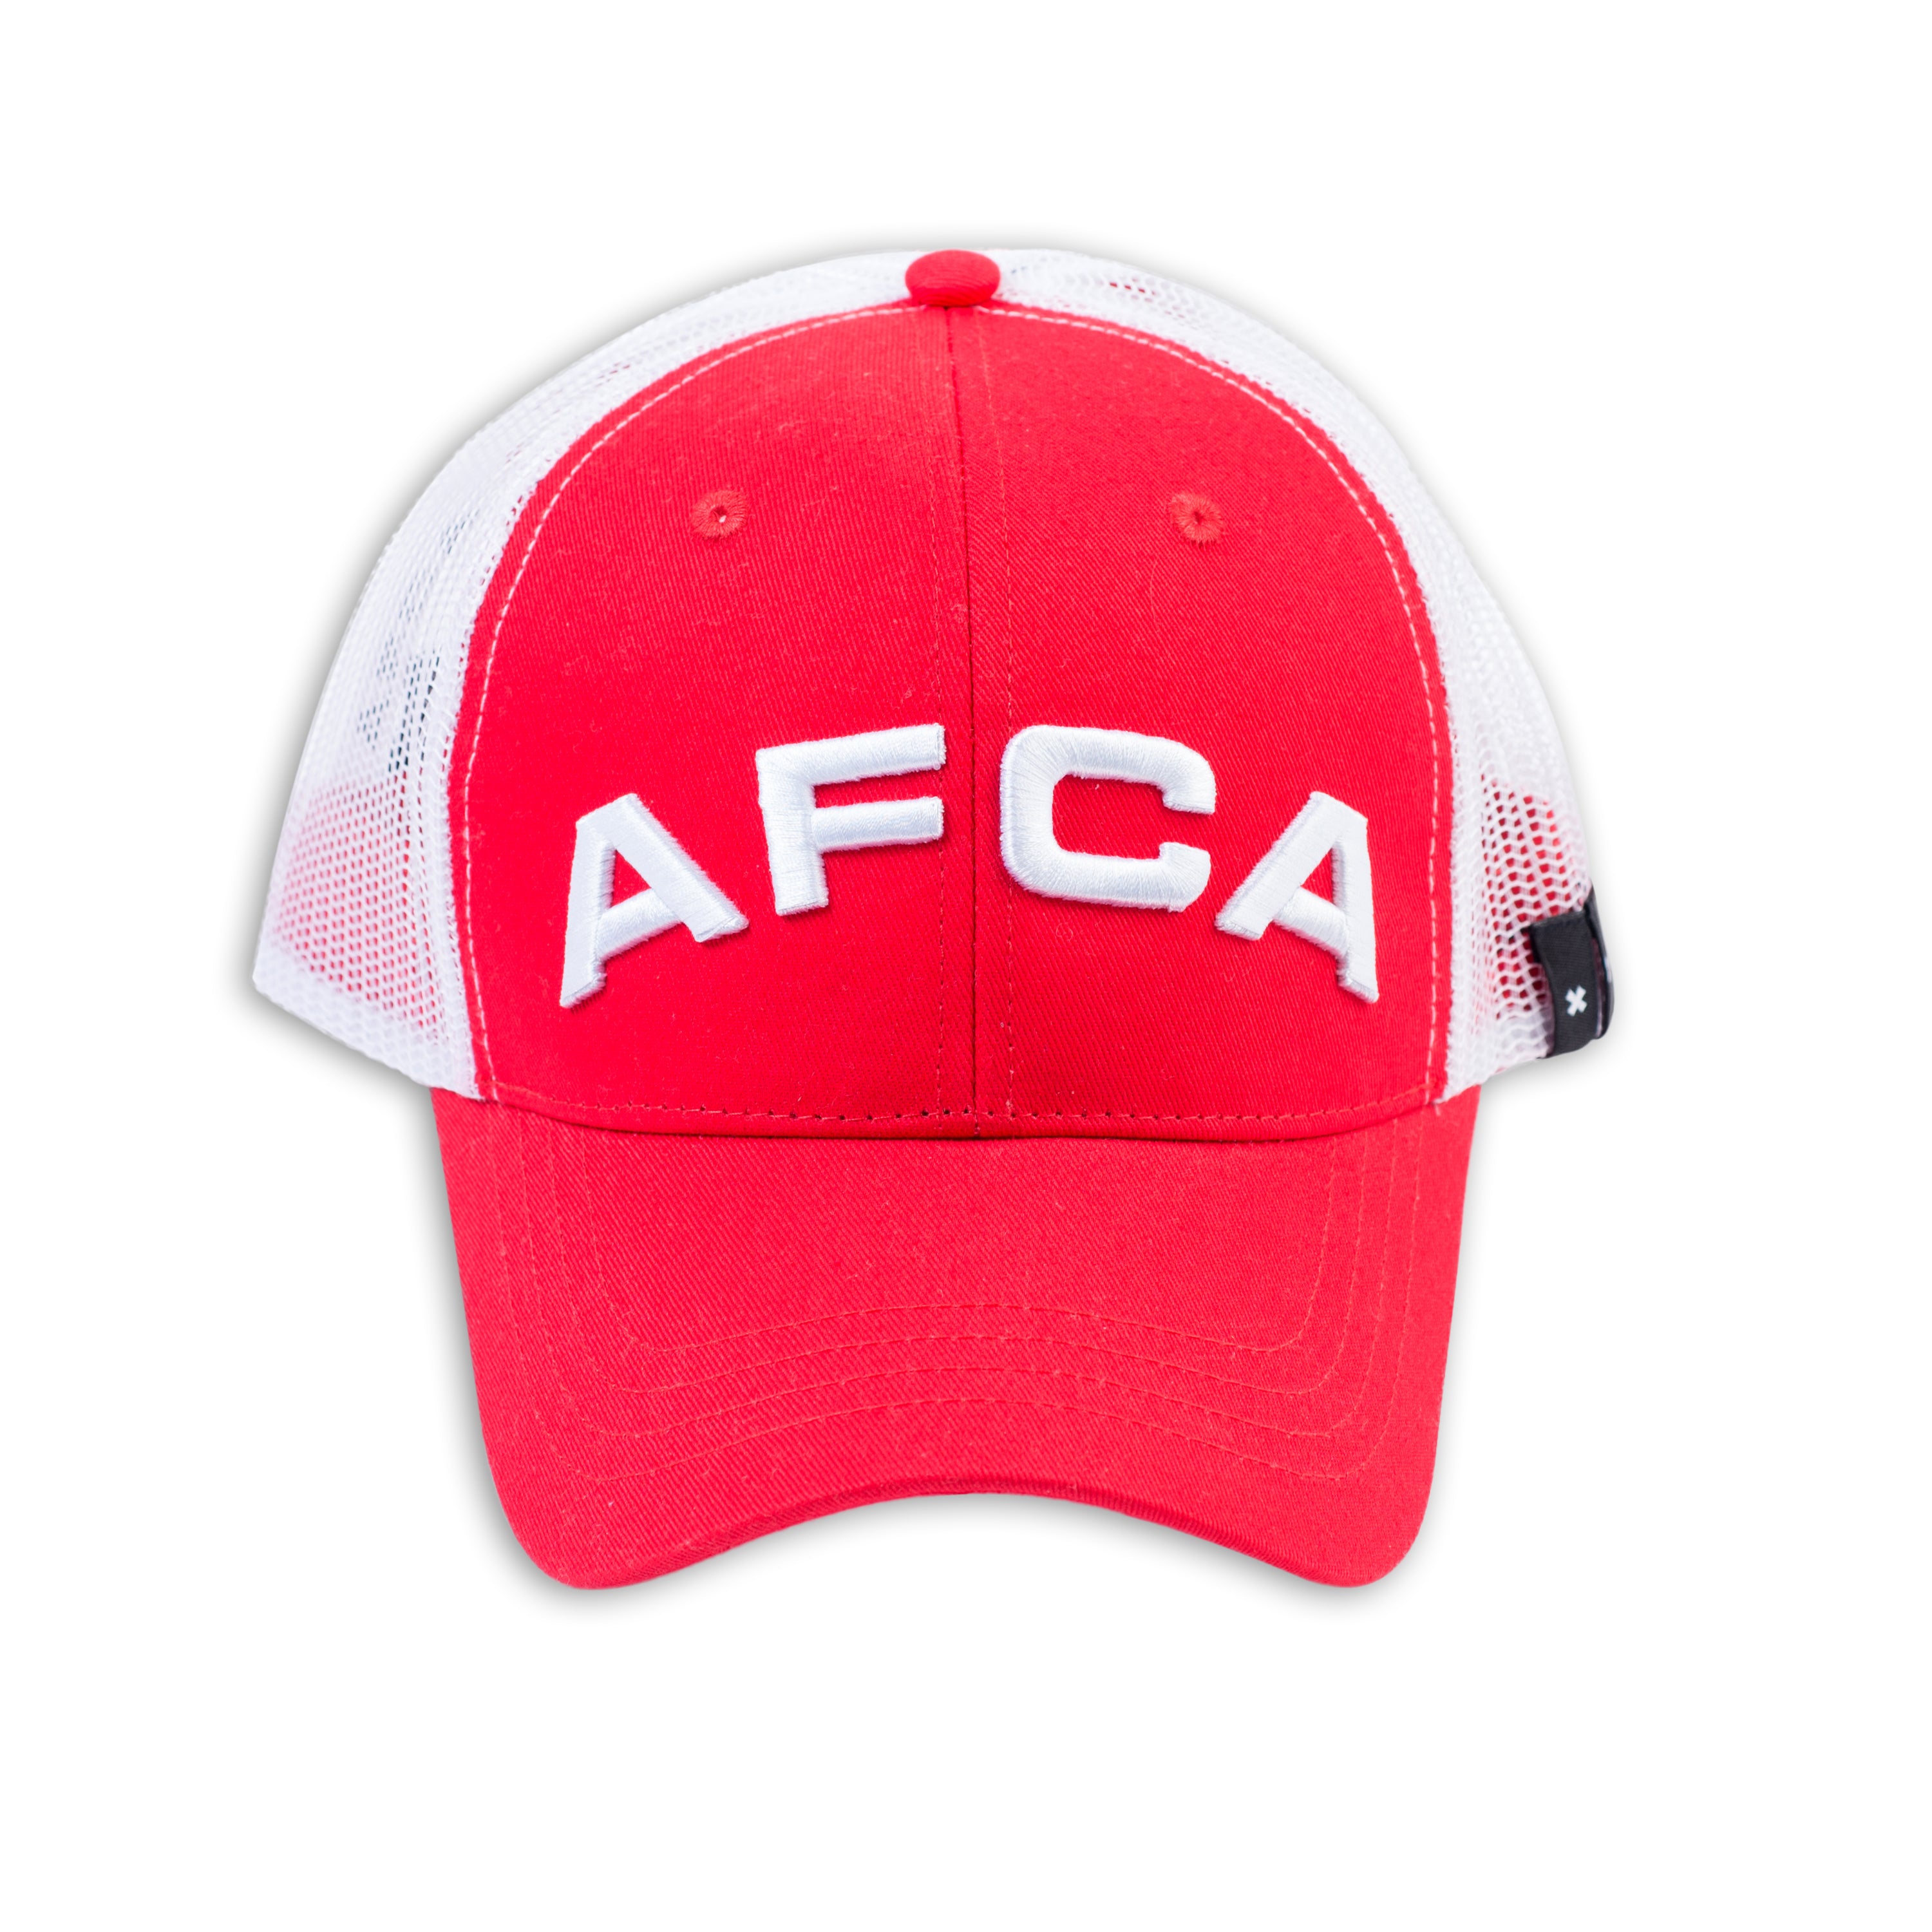 Cap AFCA rood/wit